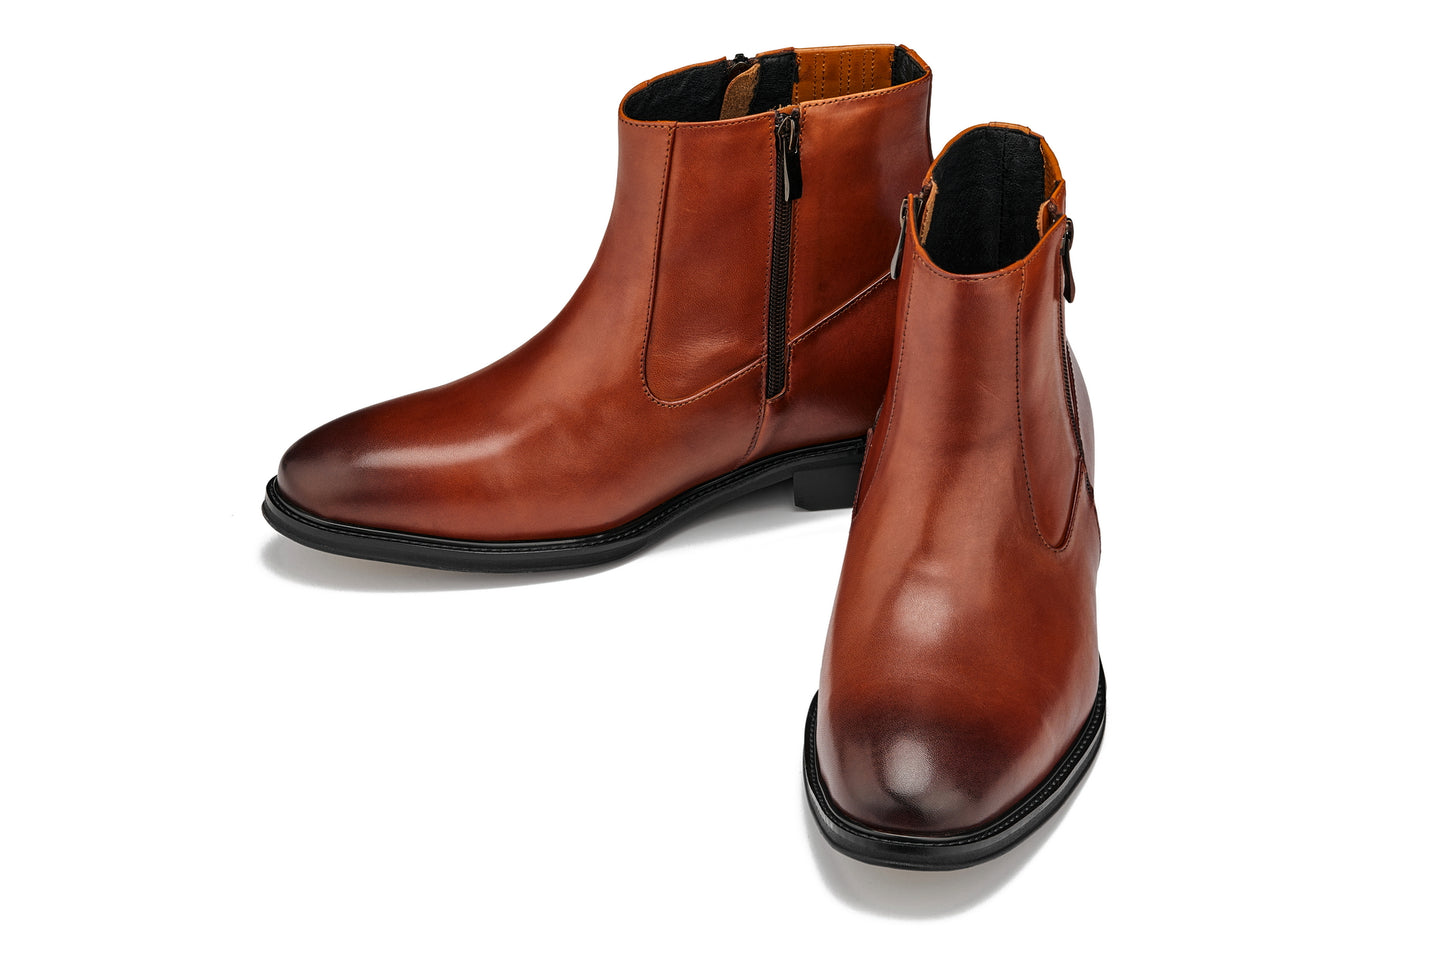 CALTO - Y70623 - 2.8 Inches Taller (Rust Brown) - Lightweight Zipper Boots